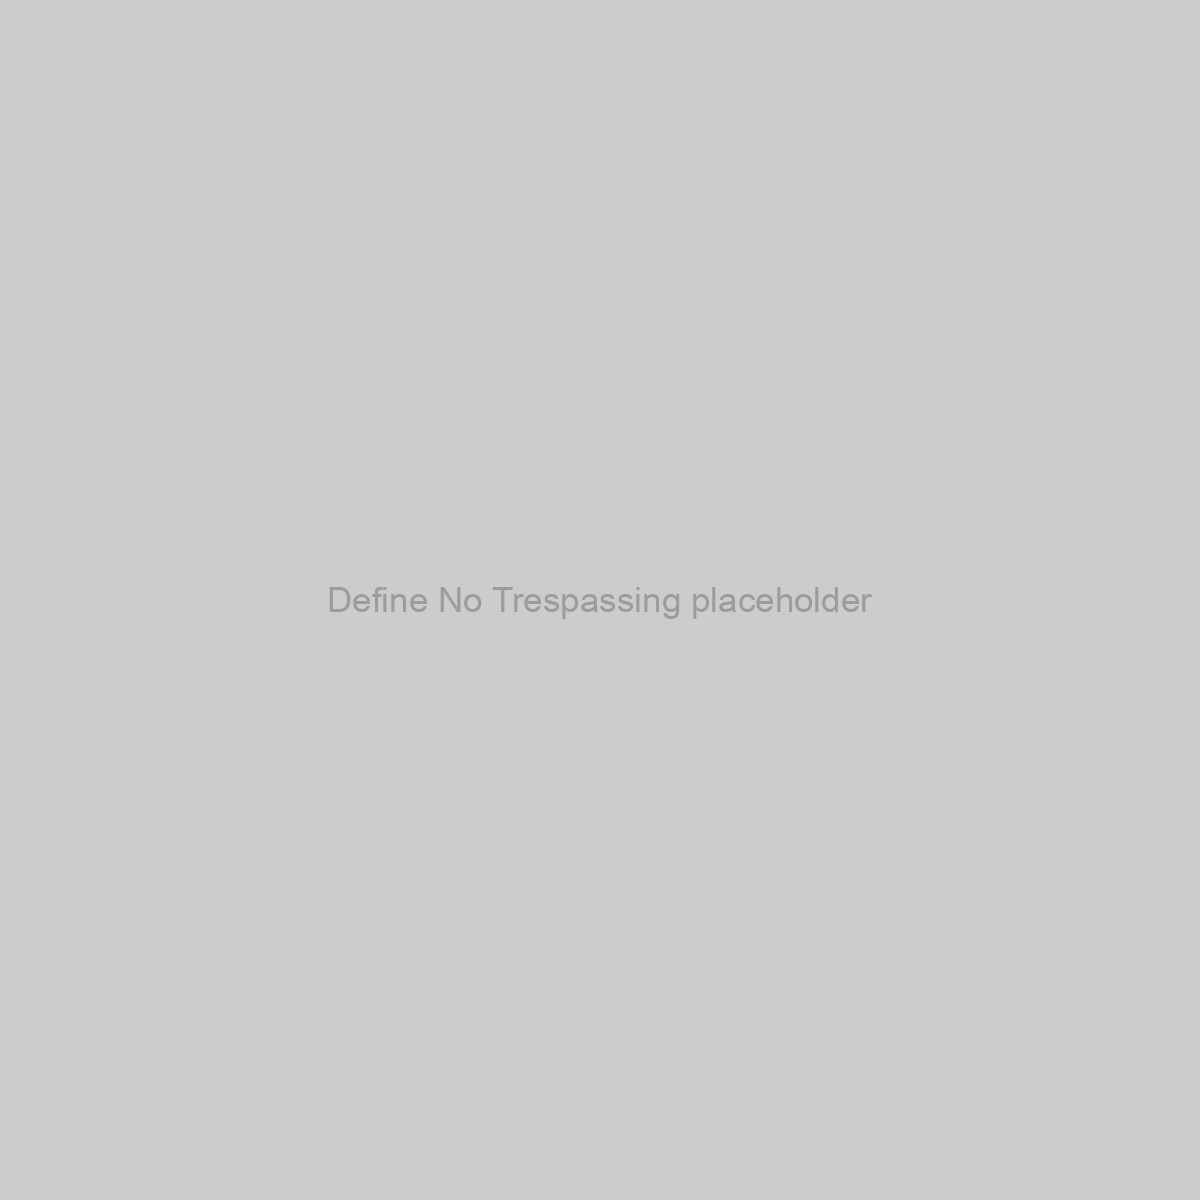 Define No Trespassing Placeholder Image